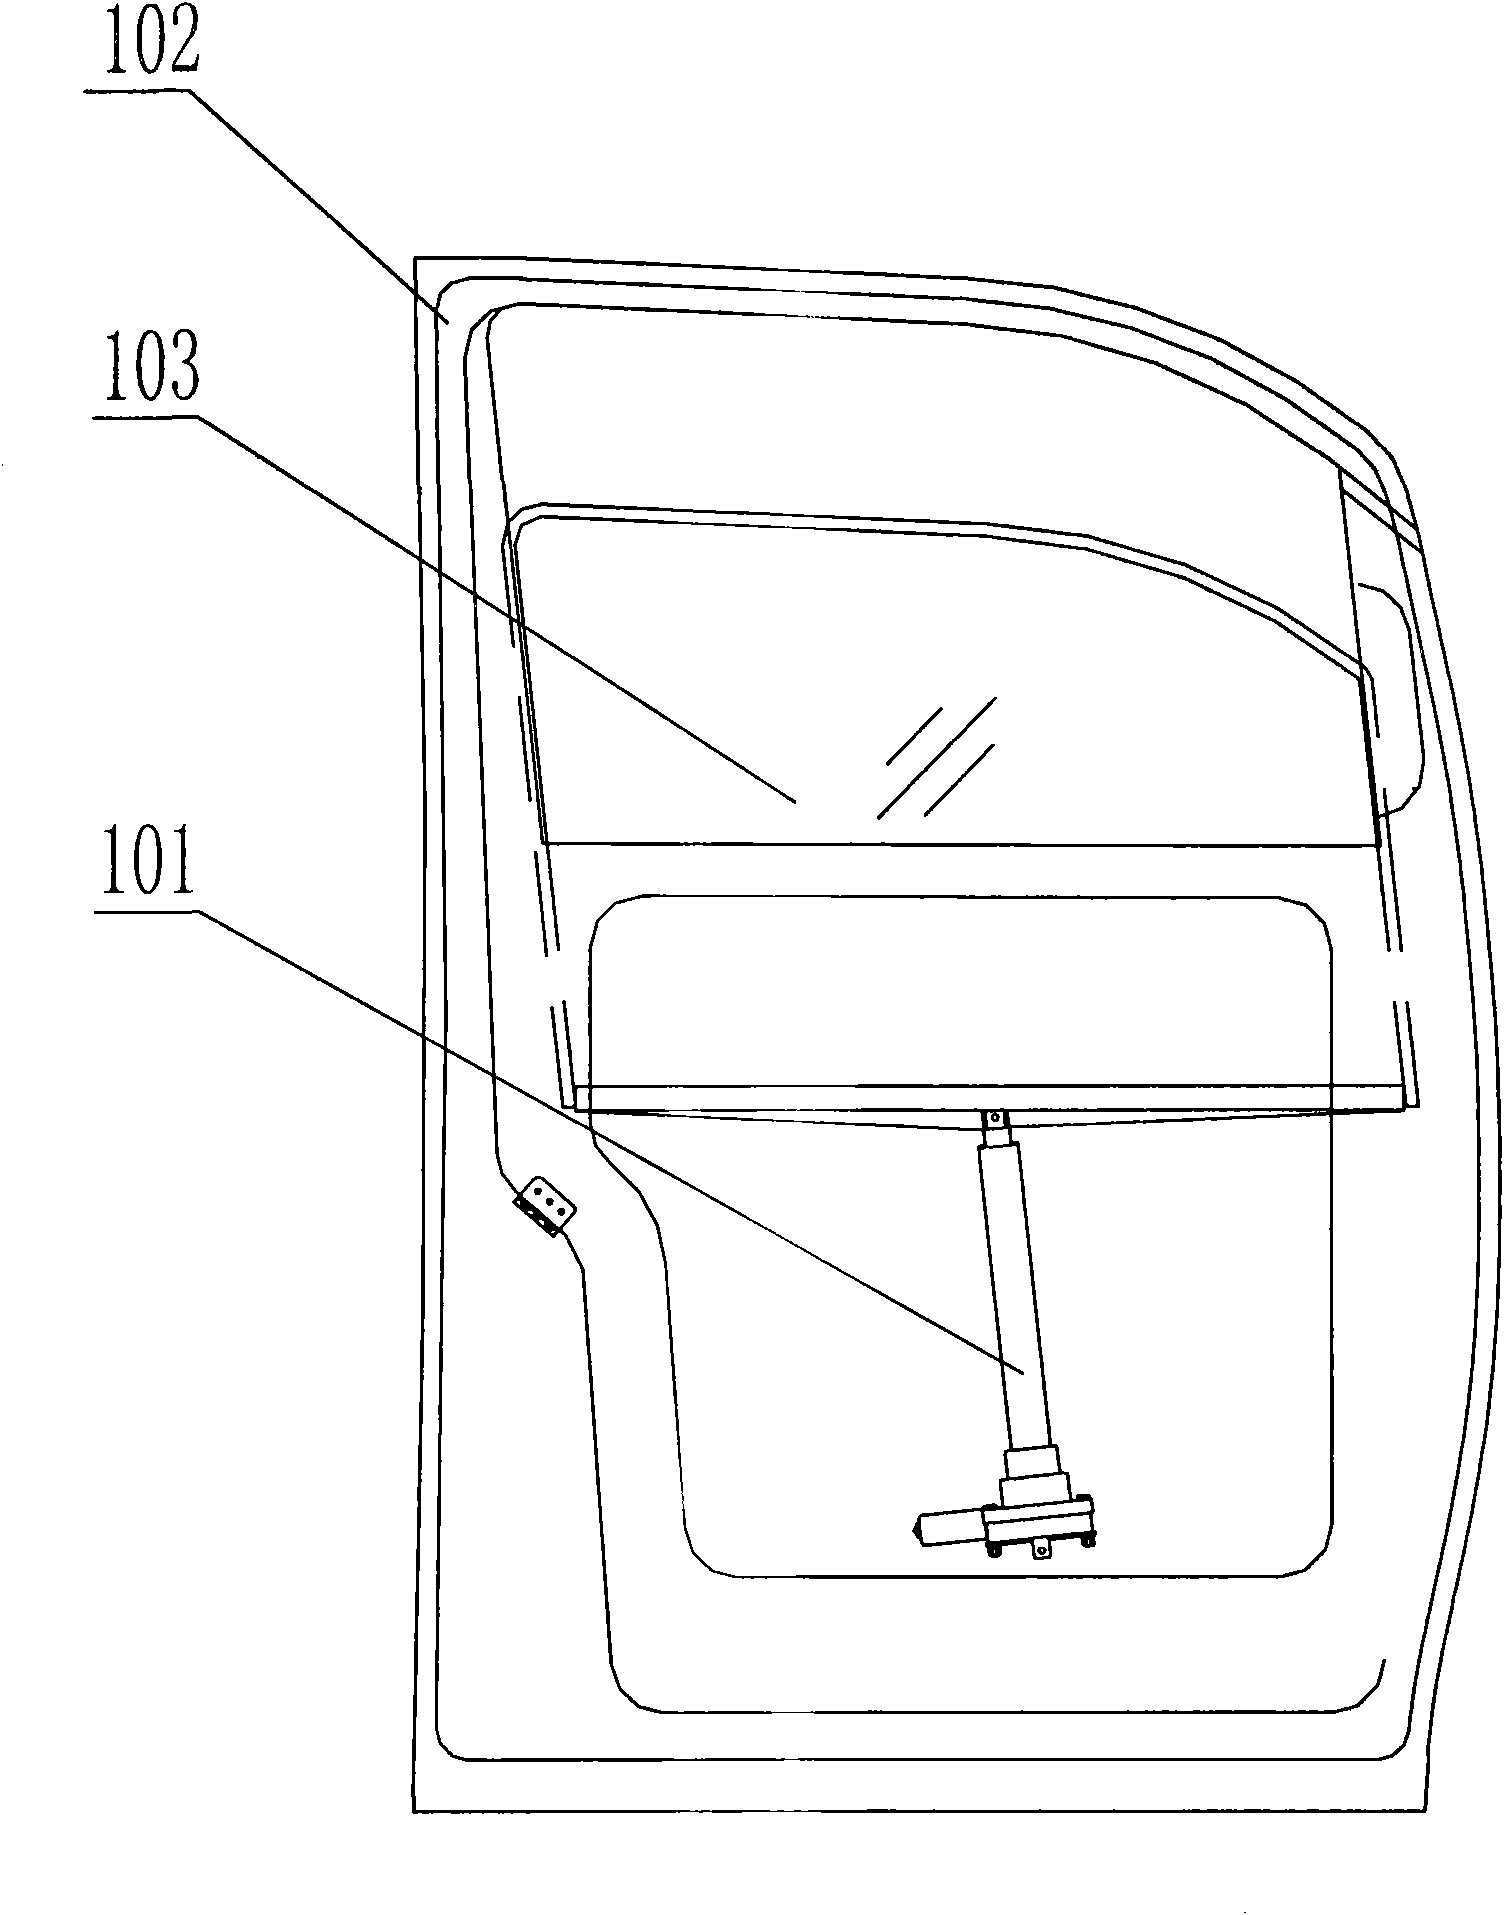 Lifting mechanism of cab side window glass of bulletproof vehicle